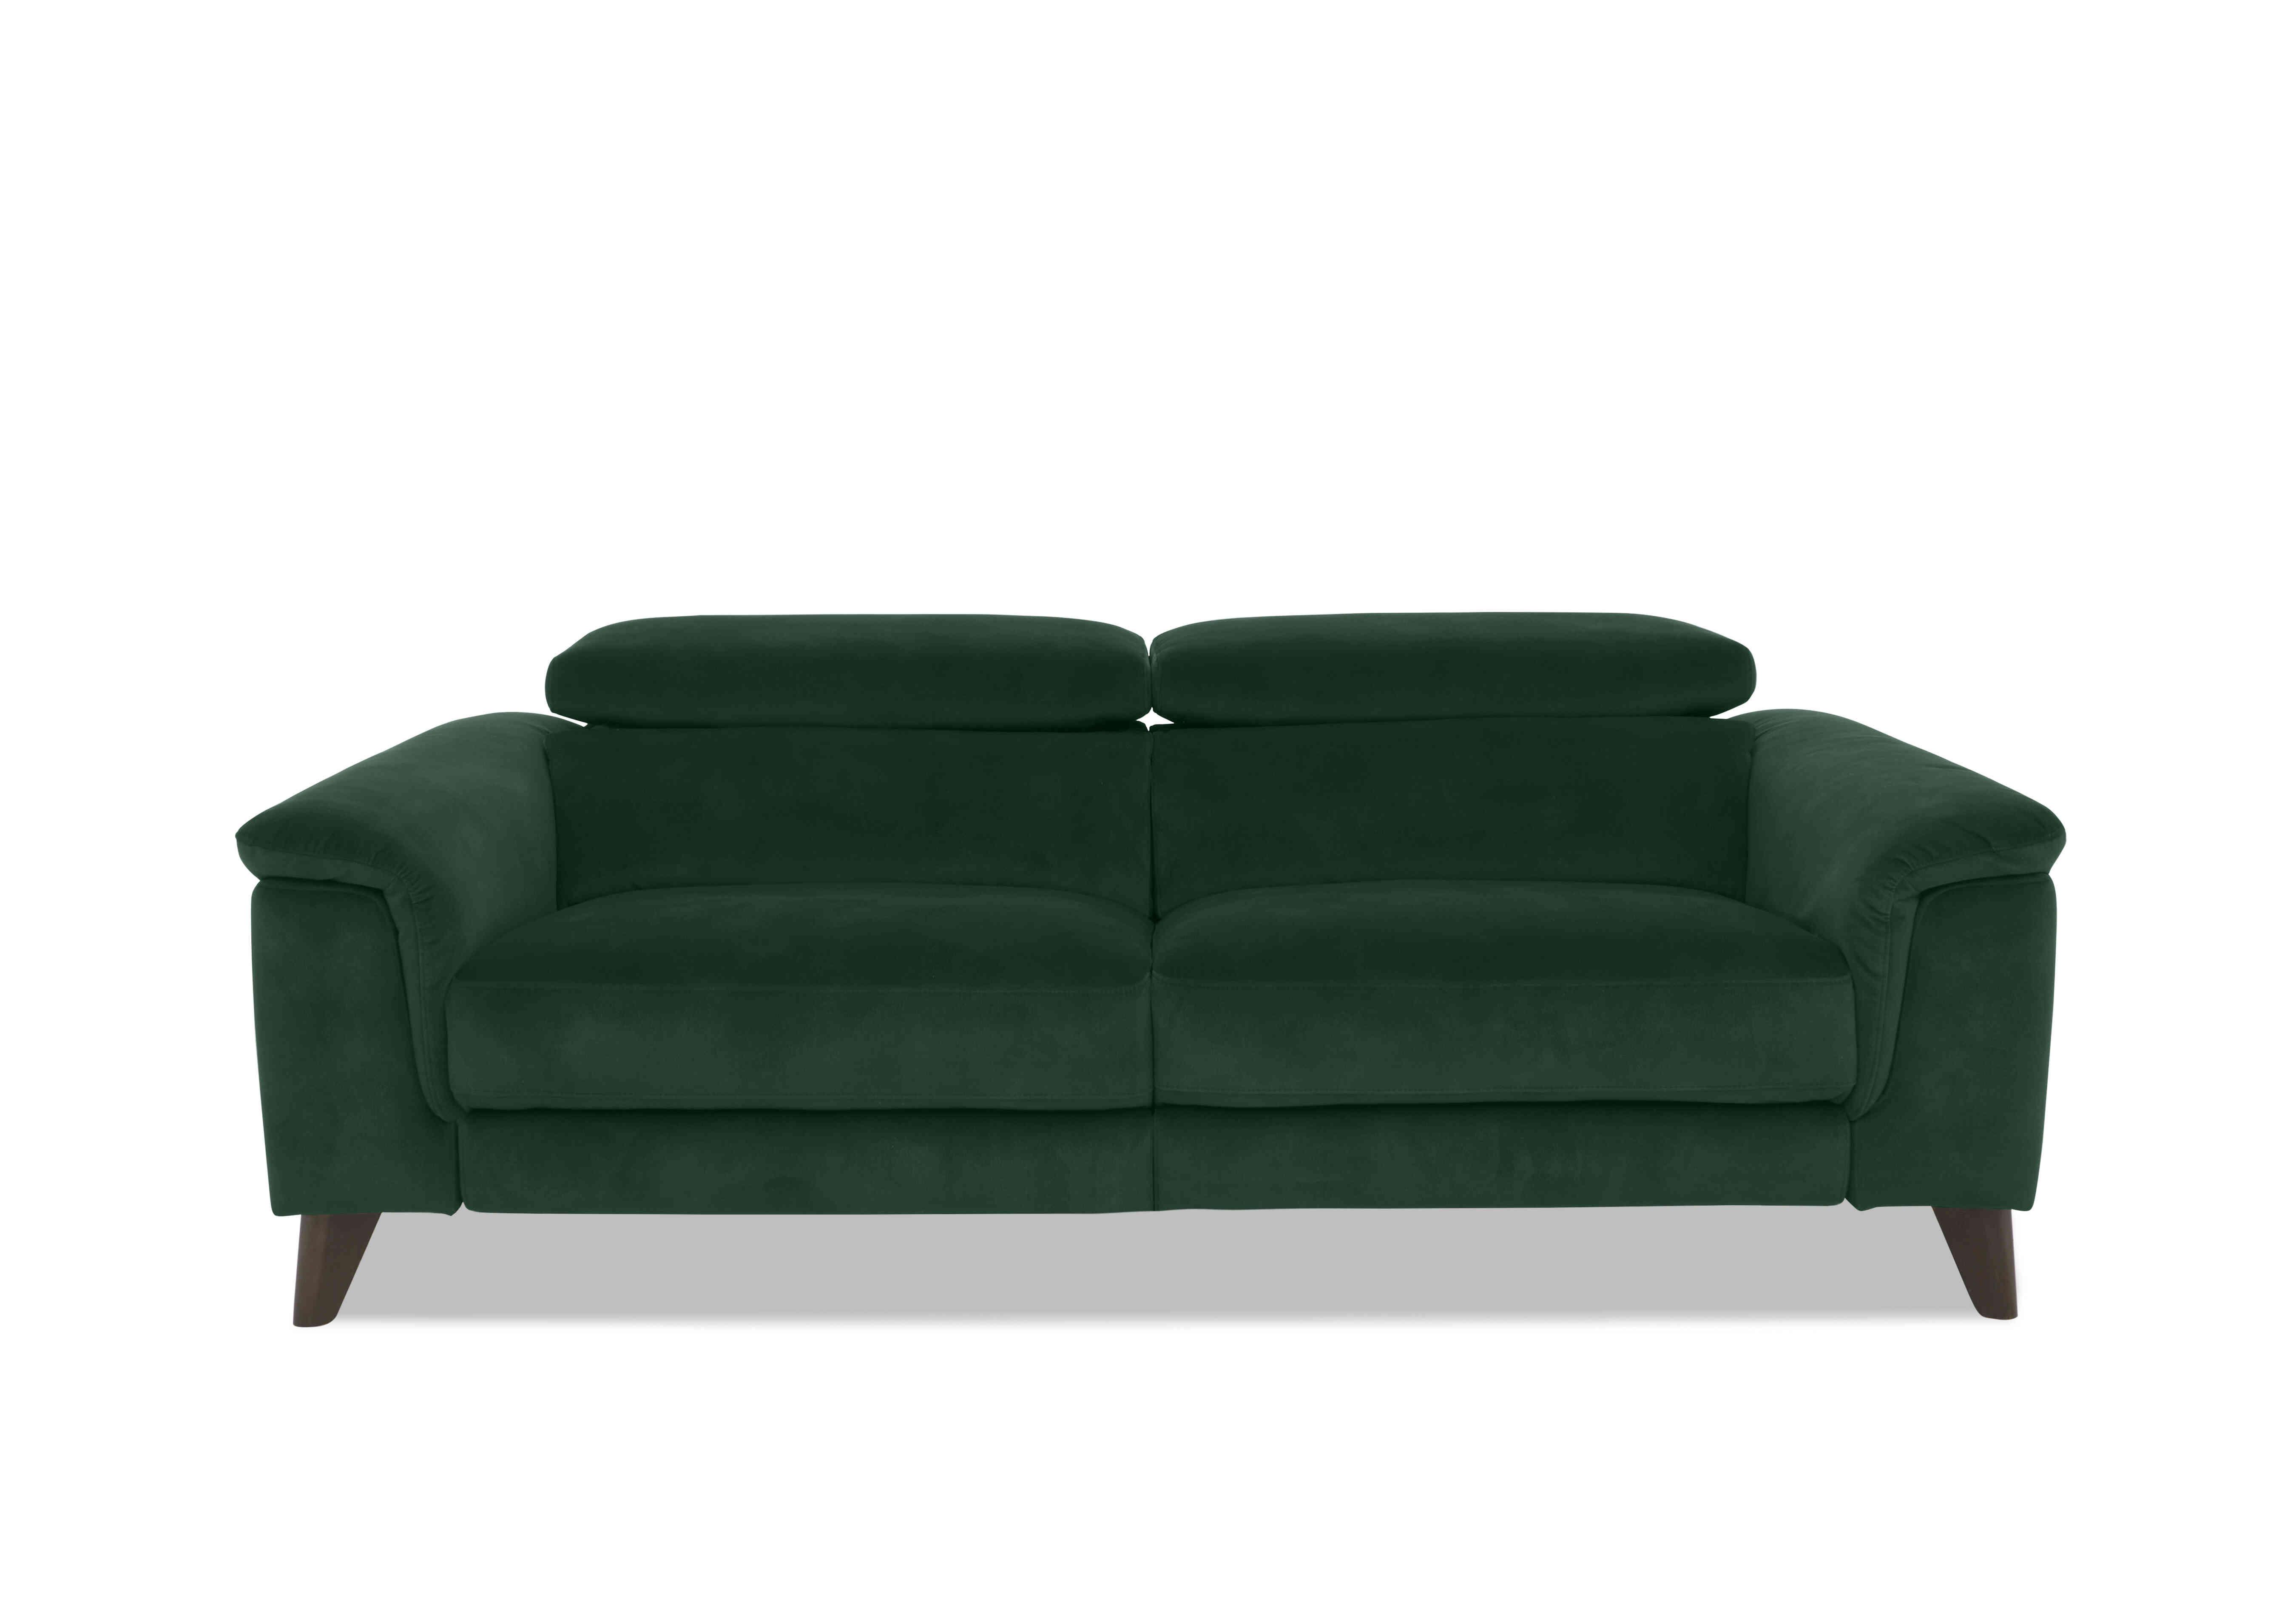 Wade 3 Seater Fabric Sofa in Fab-Meg-R37 Emerald Green on Furniture Village